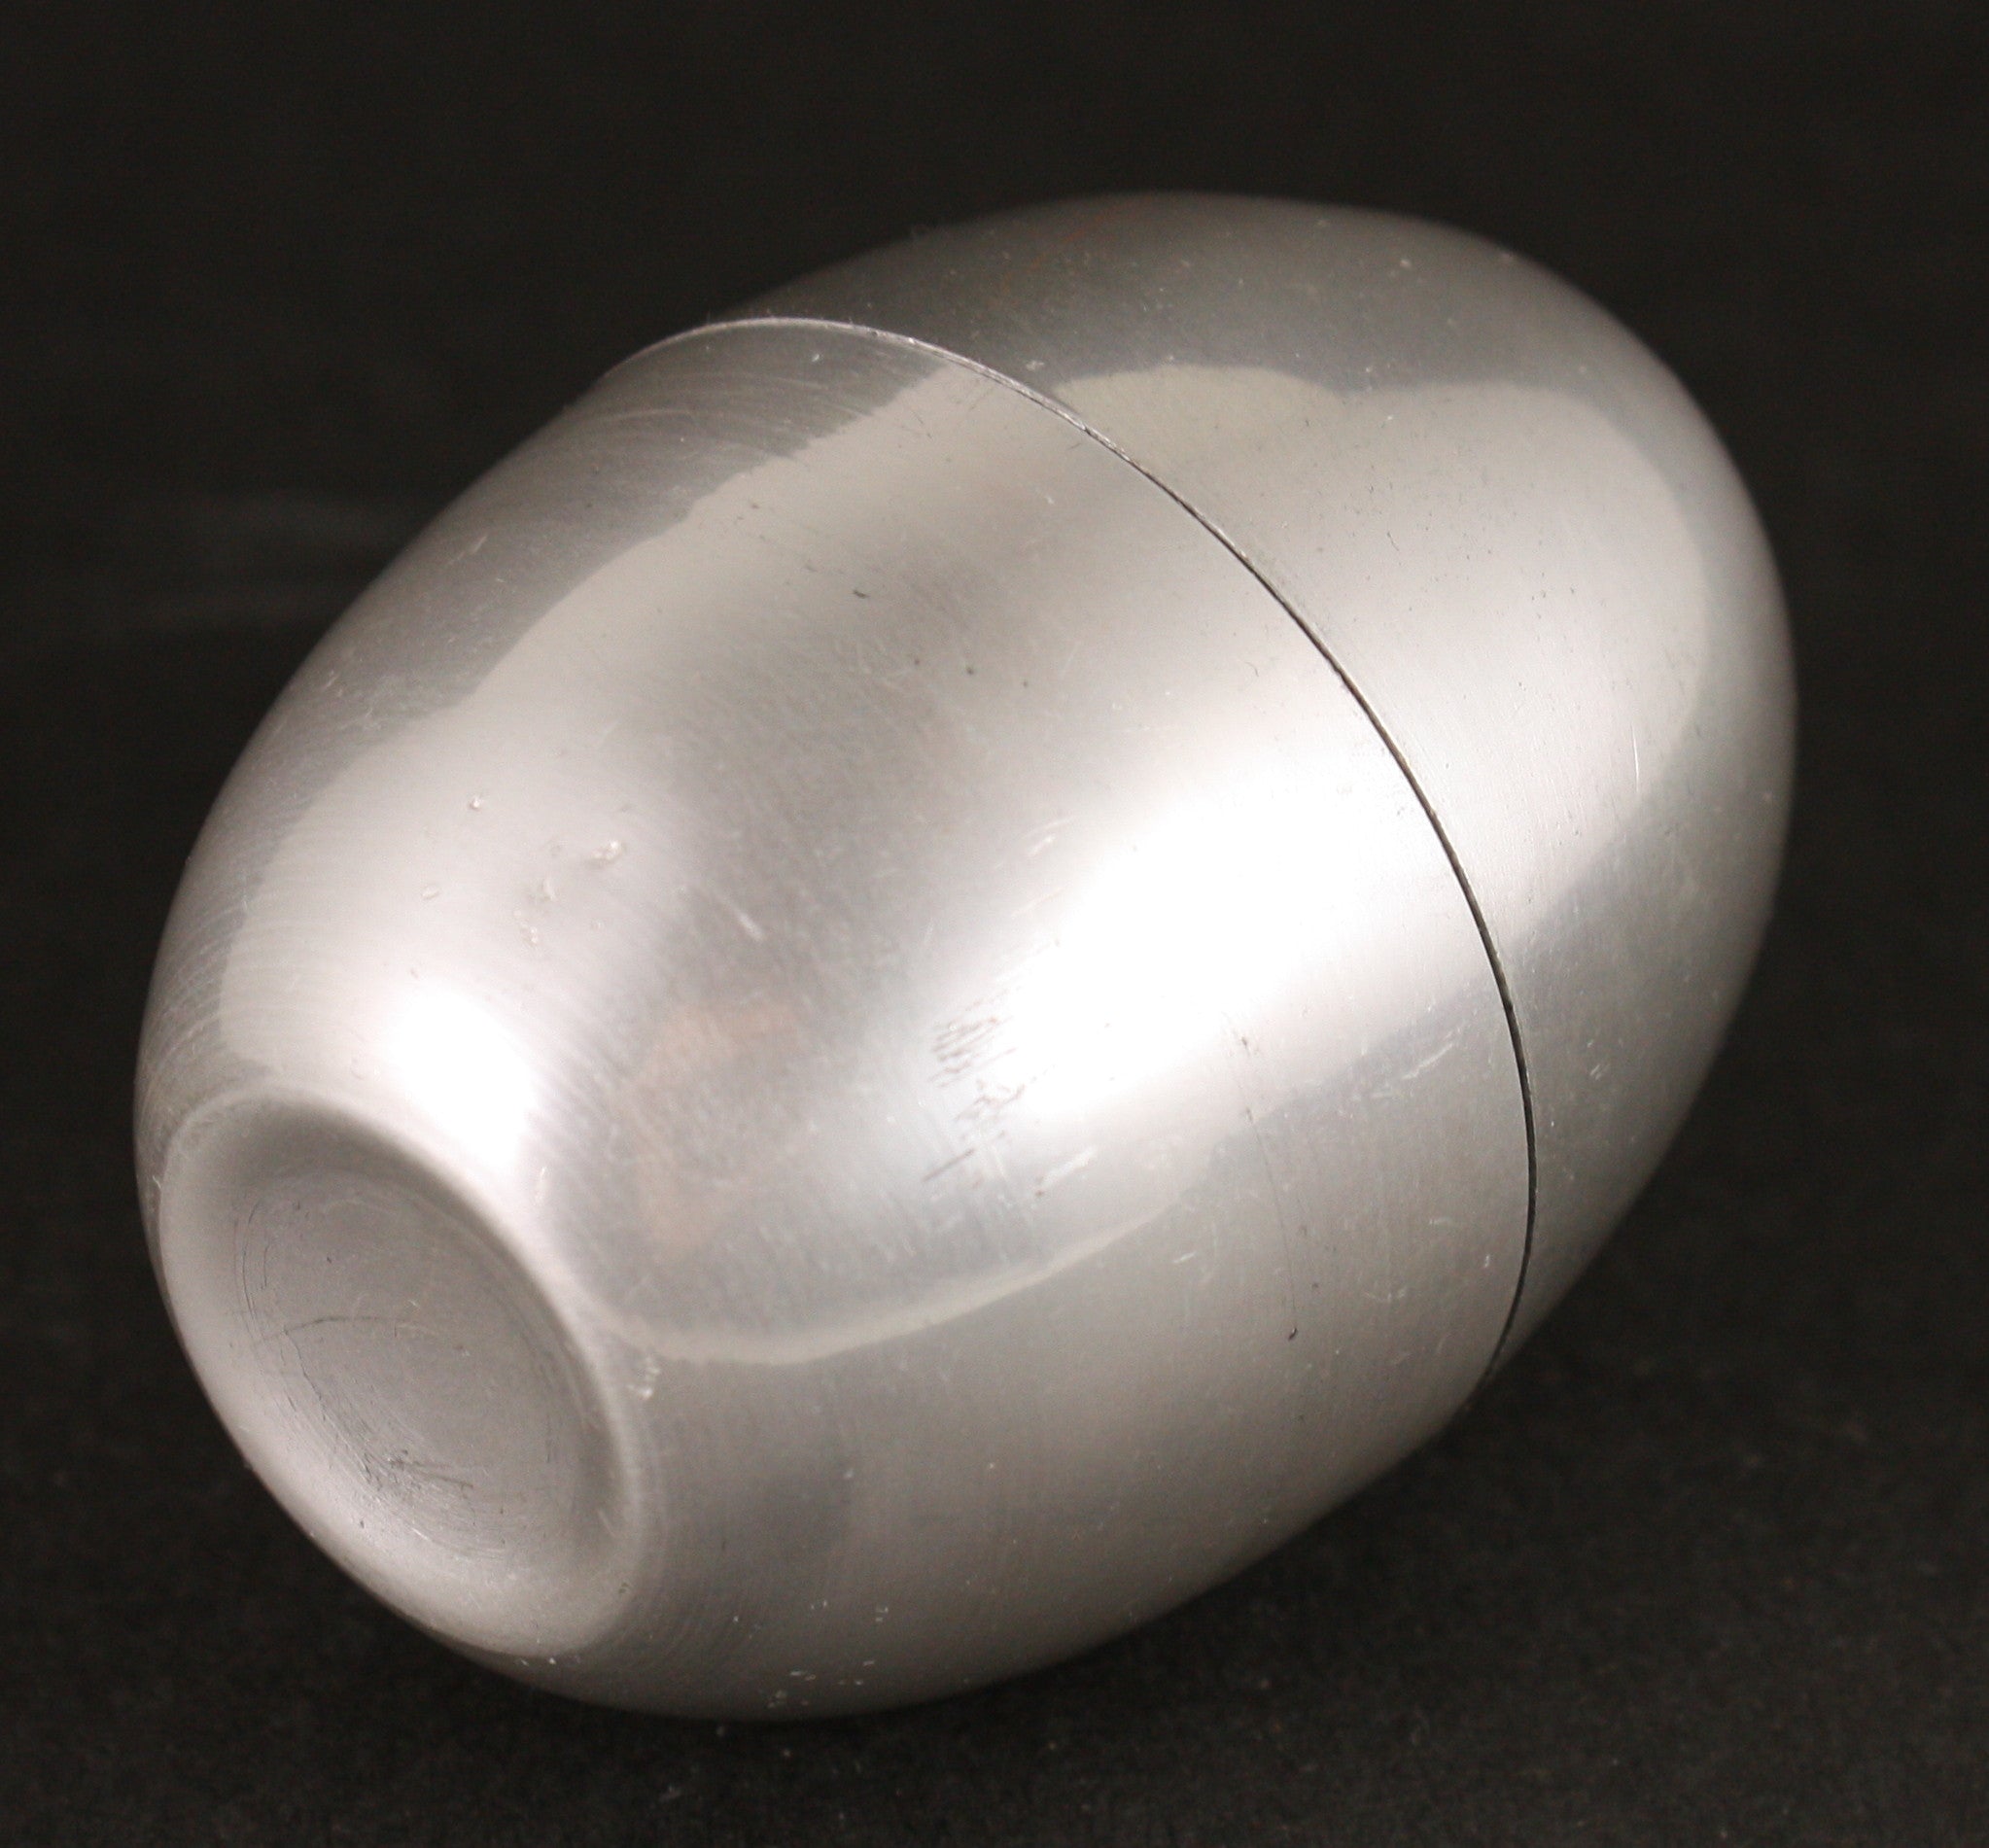 Antique Japanese Aluminium Navy Association Egg Shaped Portable Sake Cups